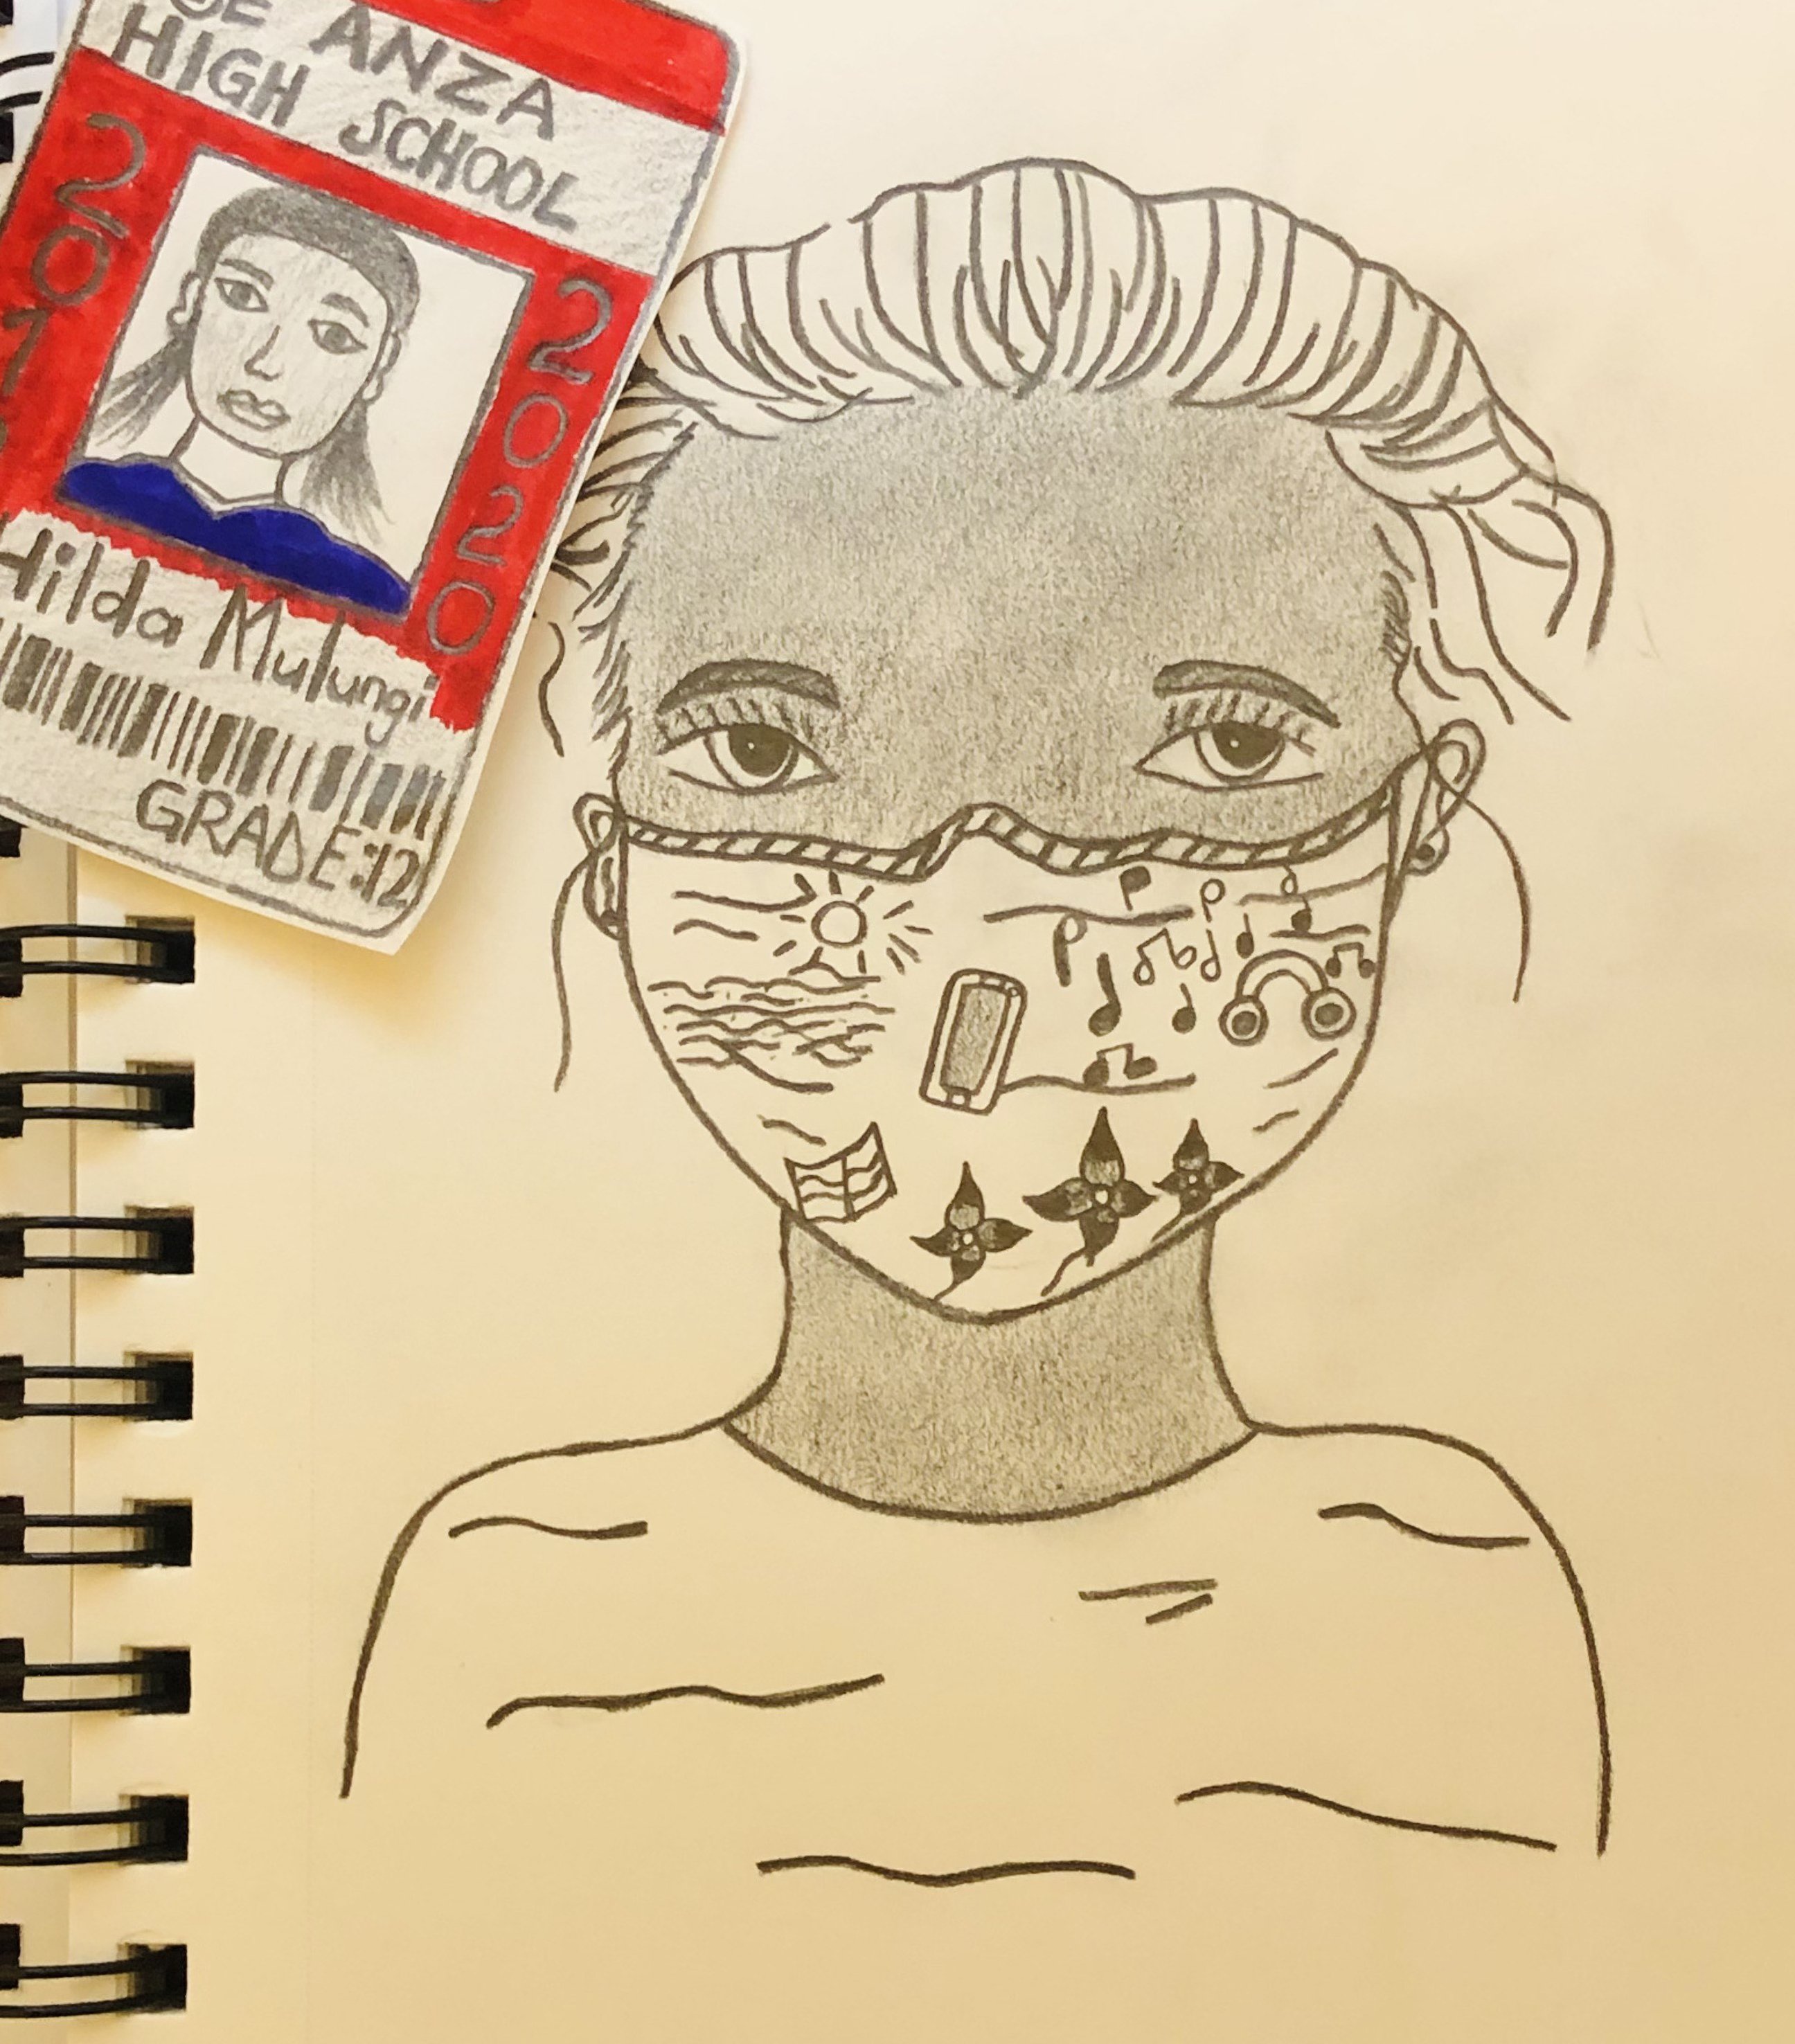 Hilda Mulungi, Grade 12, Mask Self Portrait, 2021